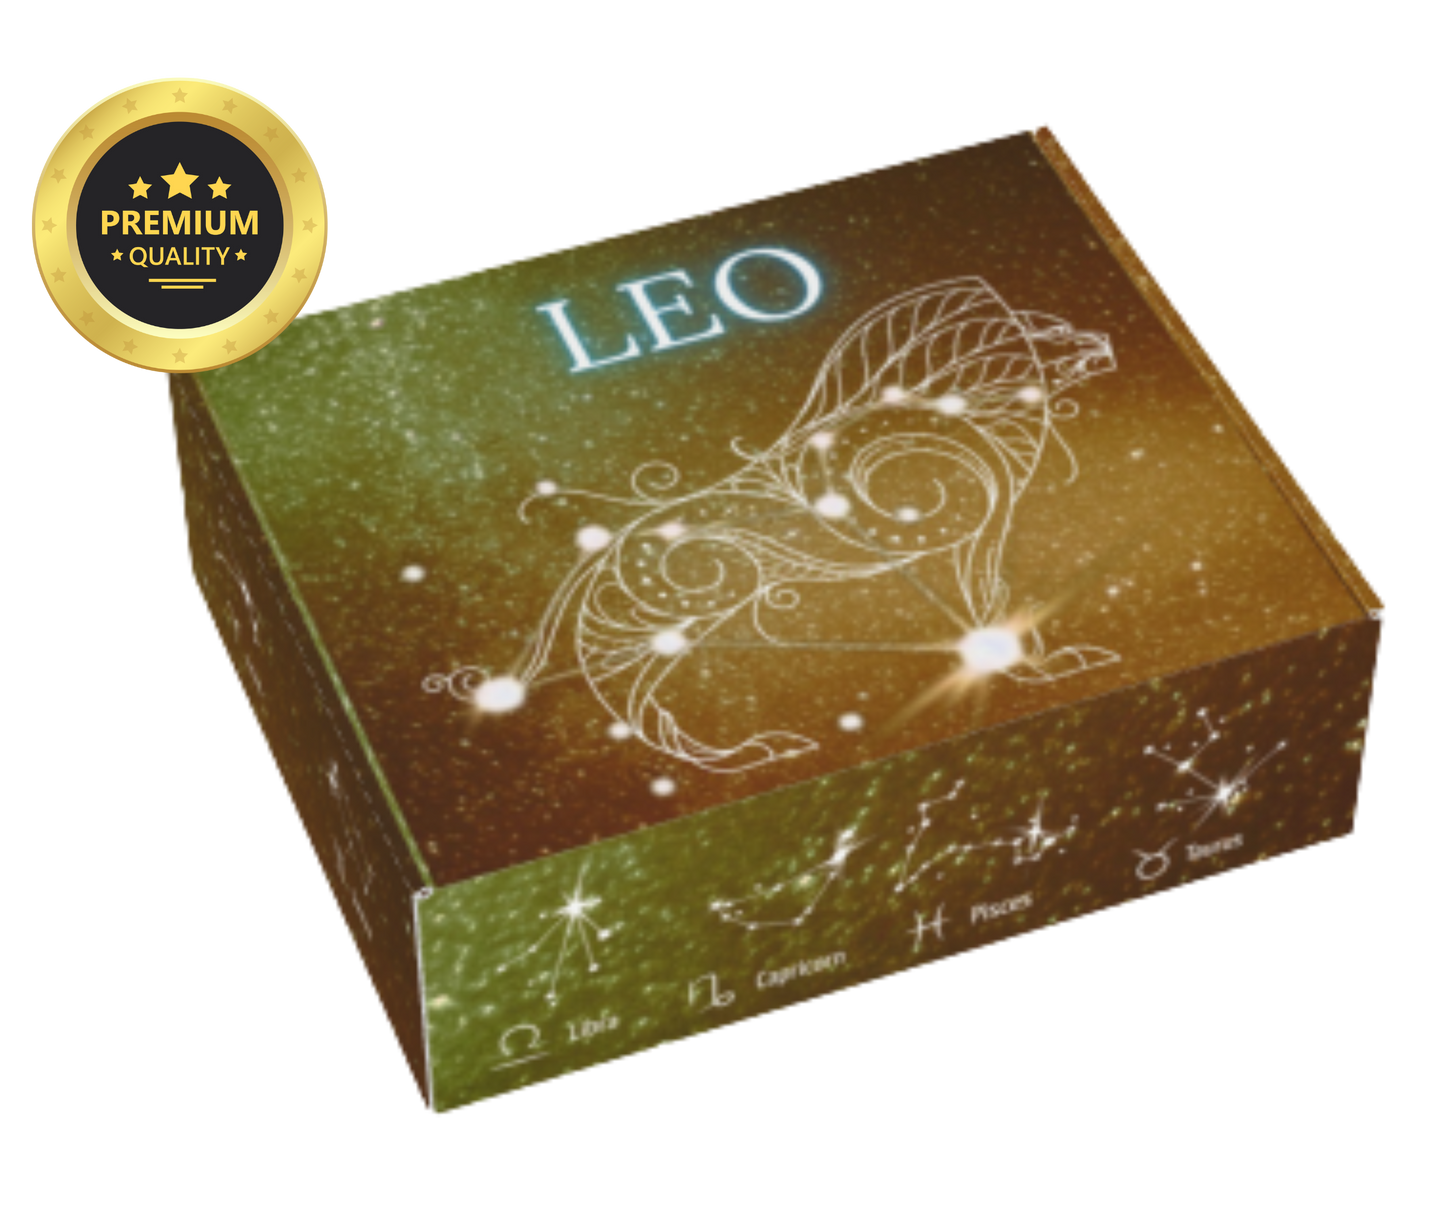 Leo Season Premium Box